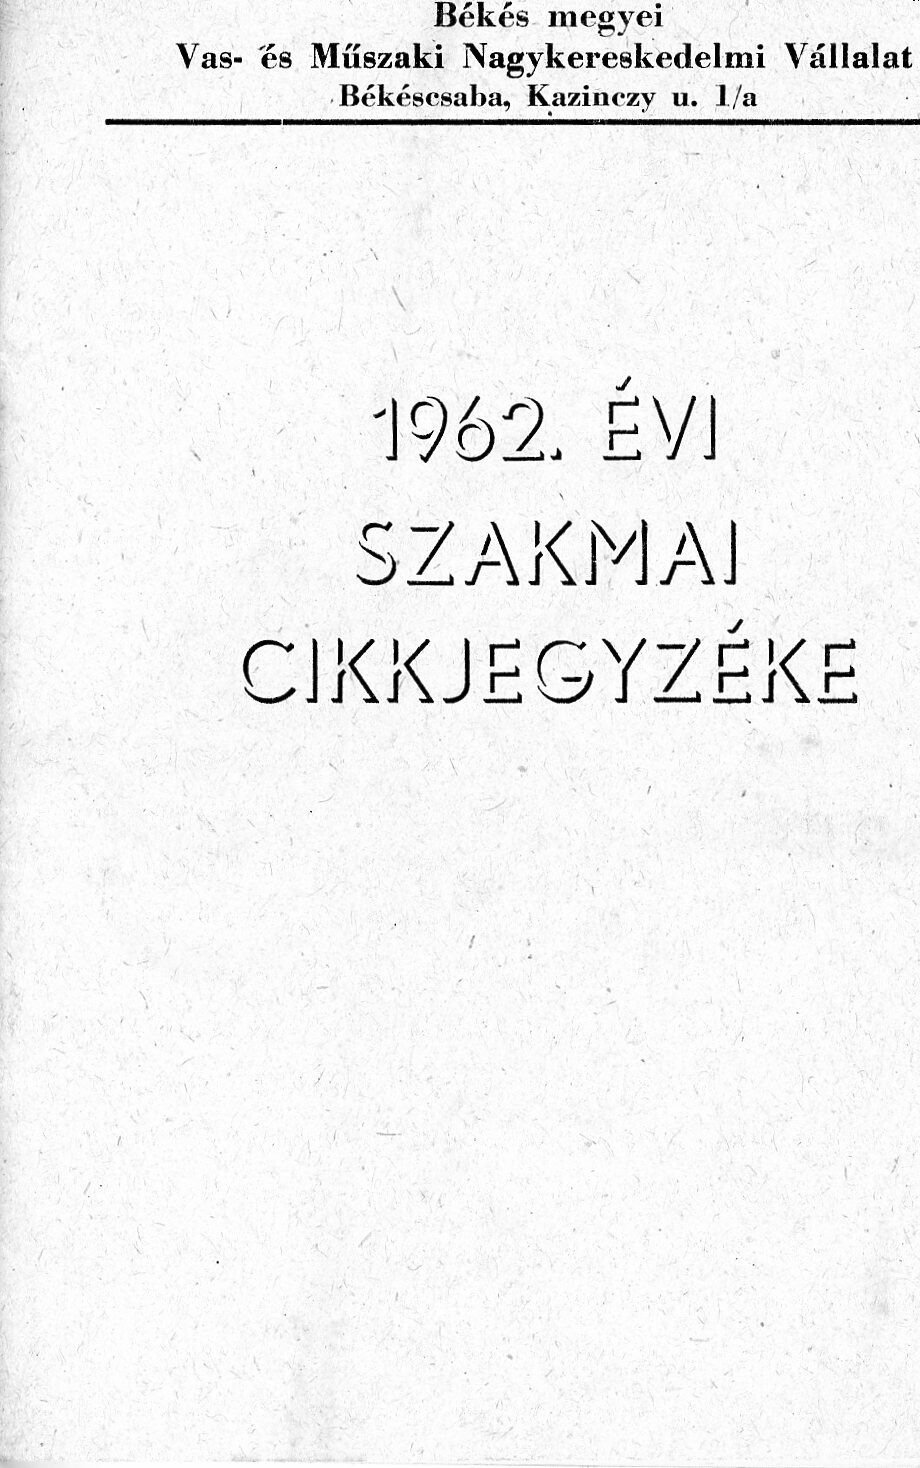 Jegyzék (Erkel Ferenc Múzeum CC BY-NC-SA)